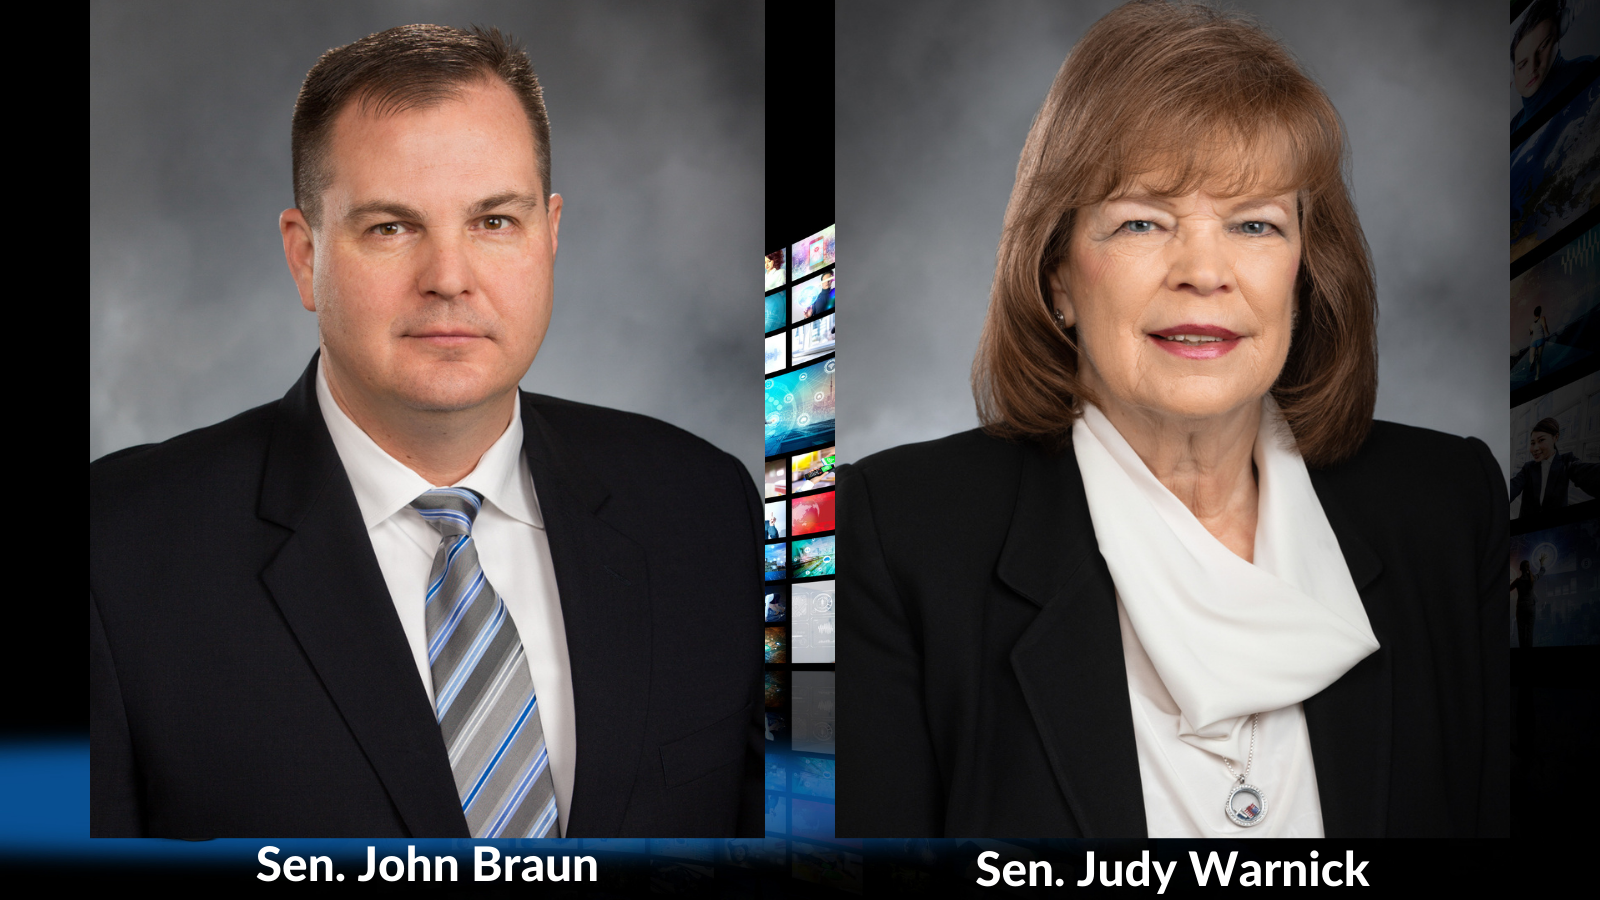 VIDEO: TVW: Associated Press Legislative Preview, featuring Senators John Braun and Judy Warnick